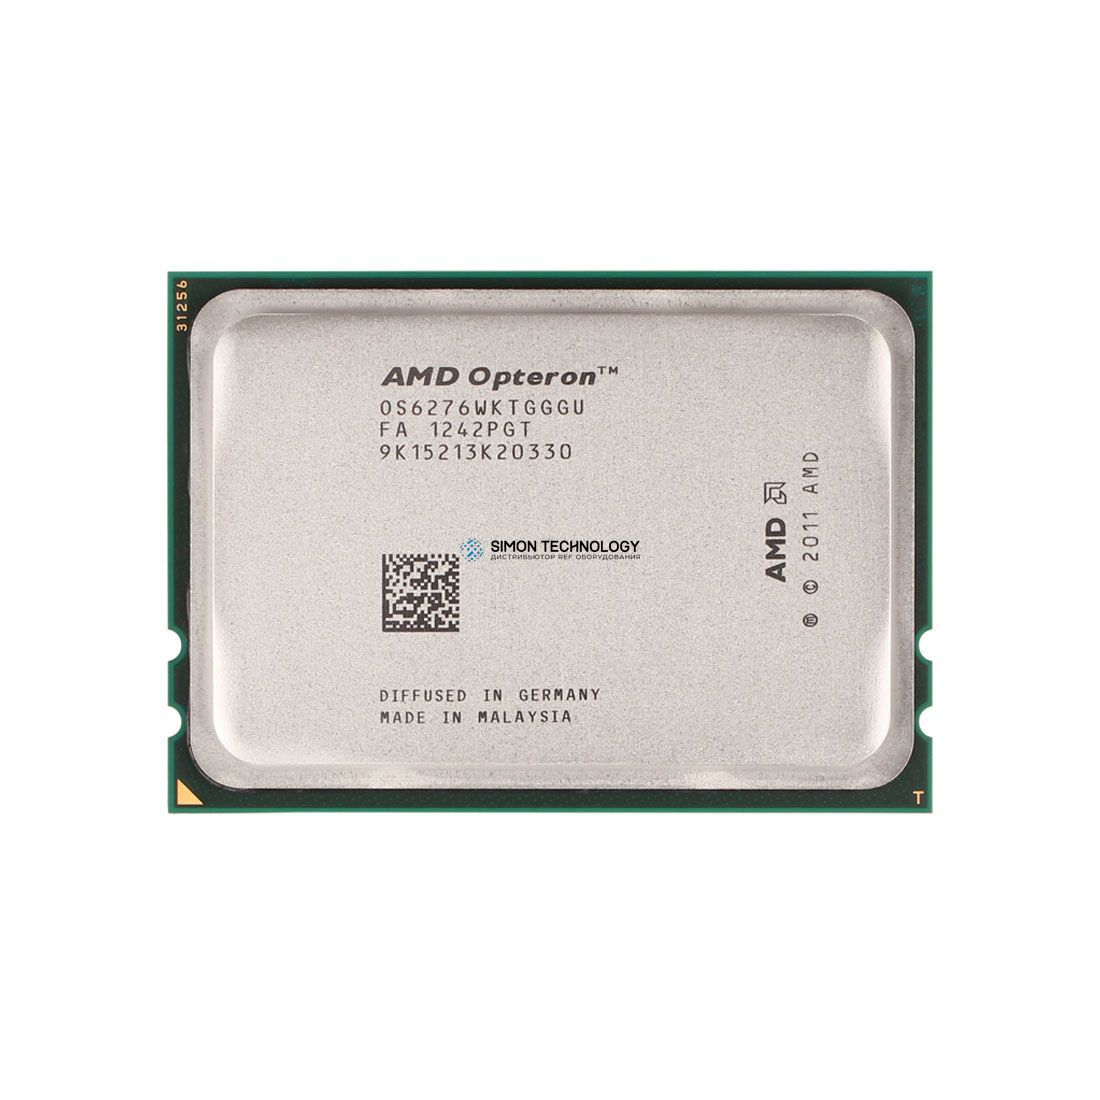 AMD CPU OPTERON 6276 QC 2.30GHz 115W OS6276WKTGGGU 